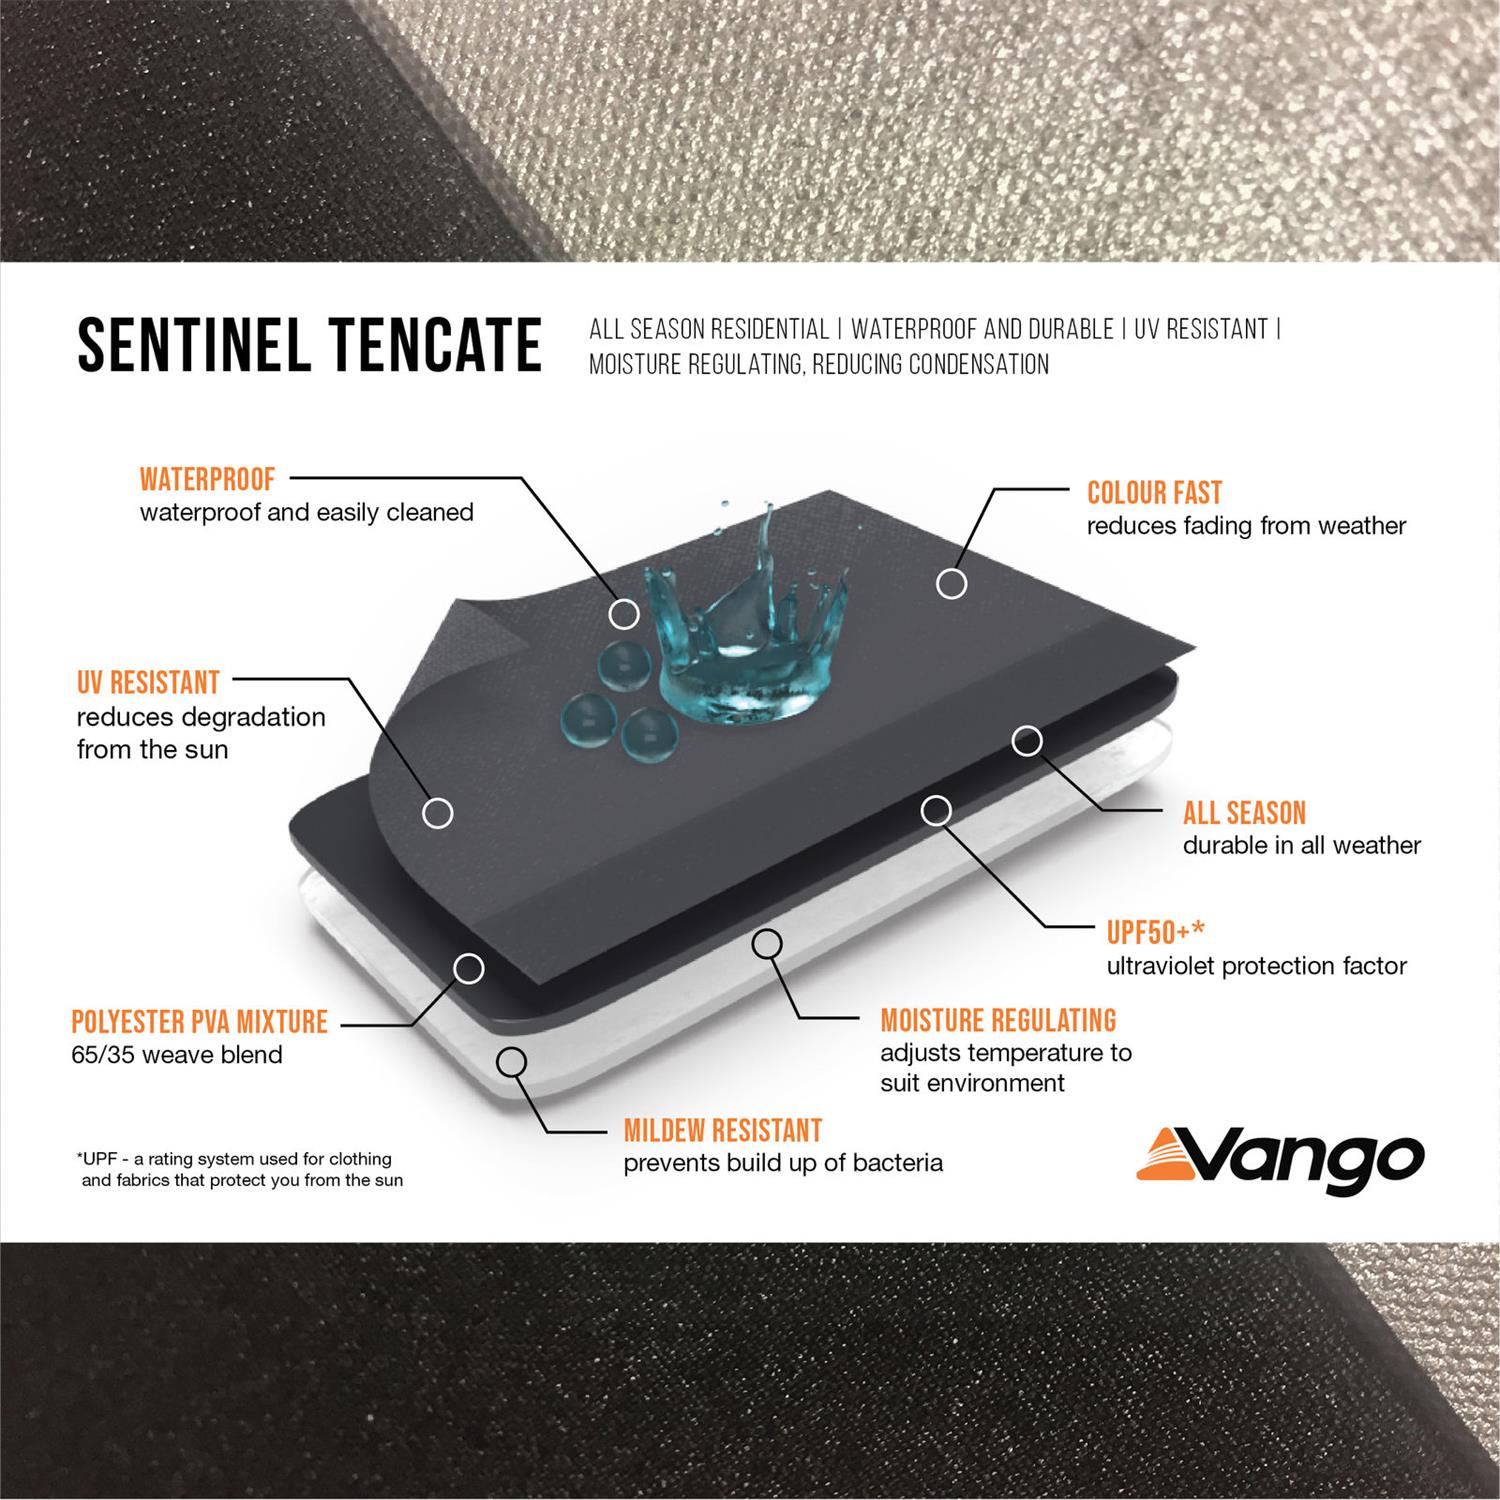 Vango's Sentinel TenCate fabric.